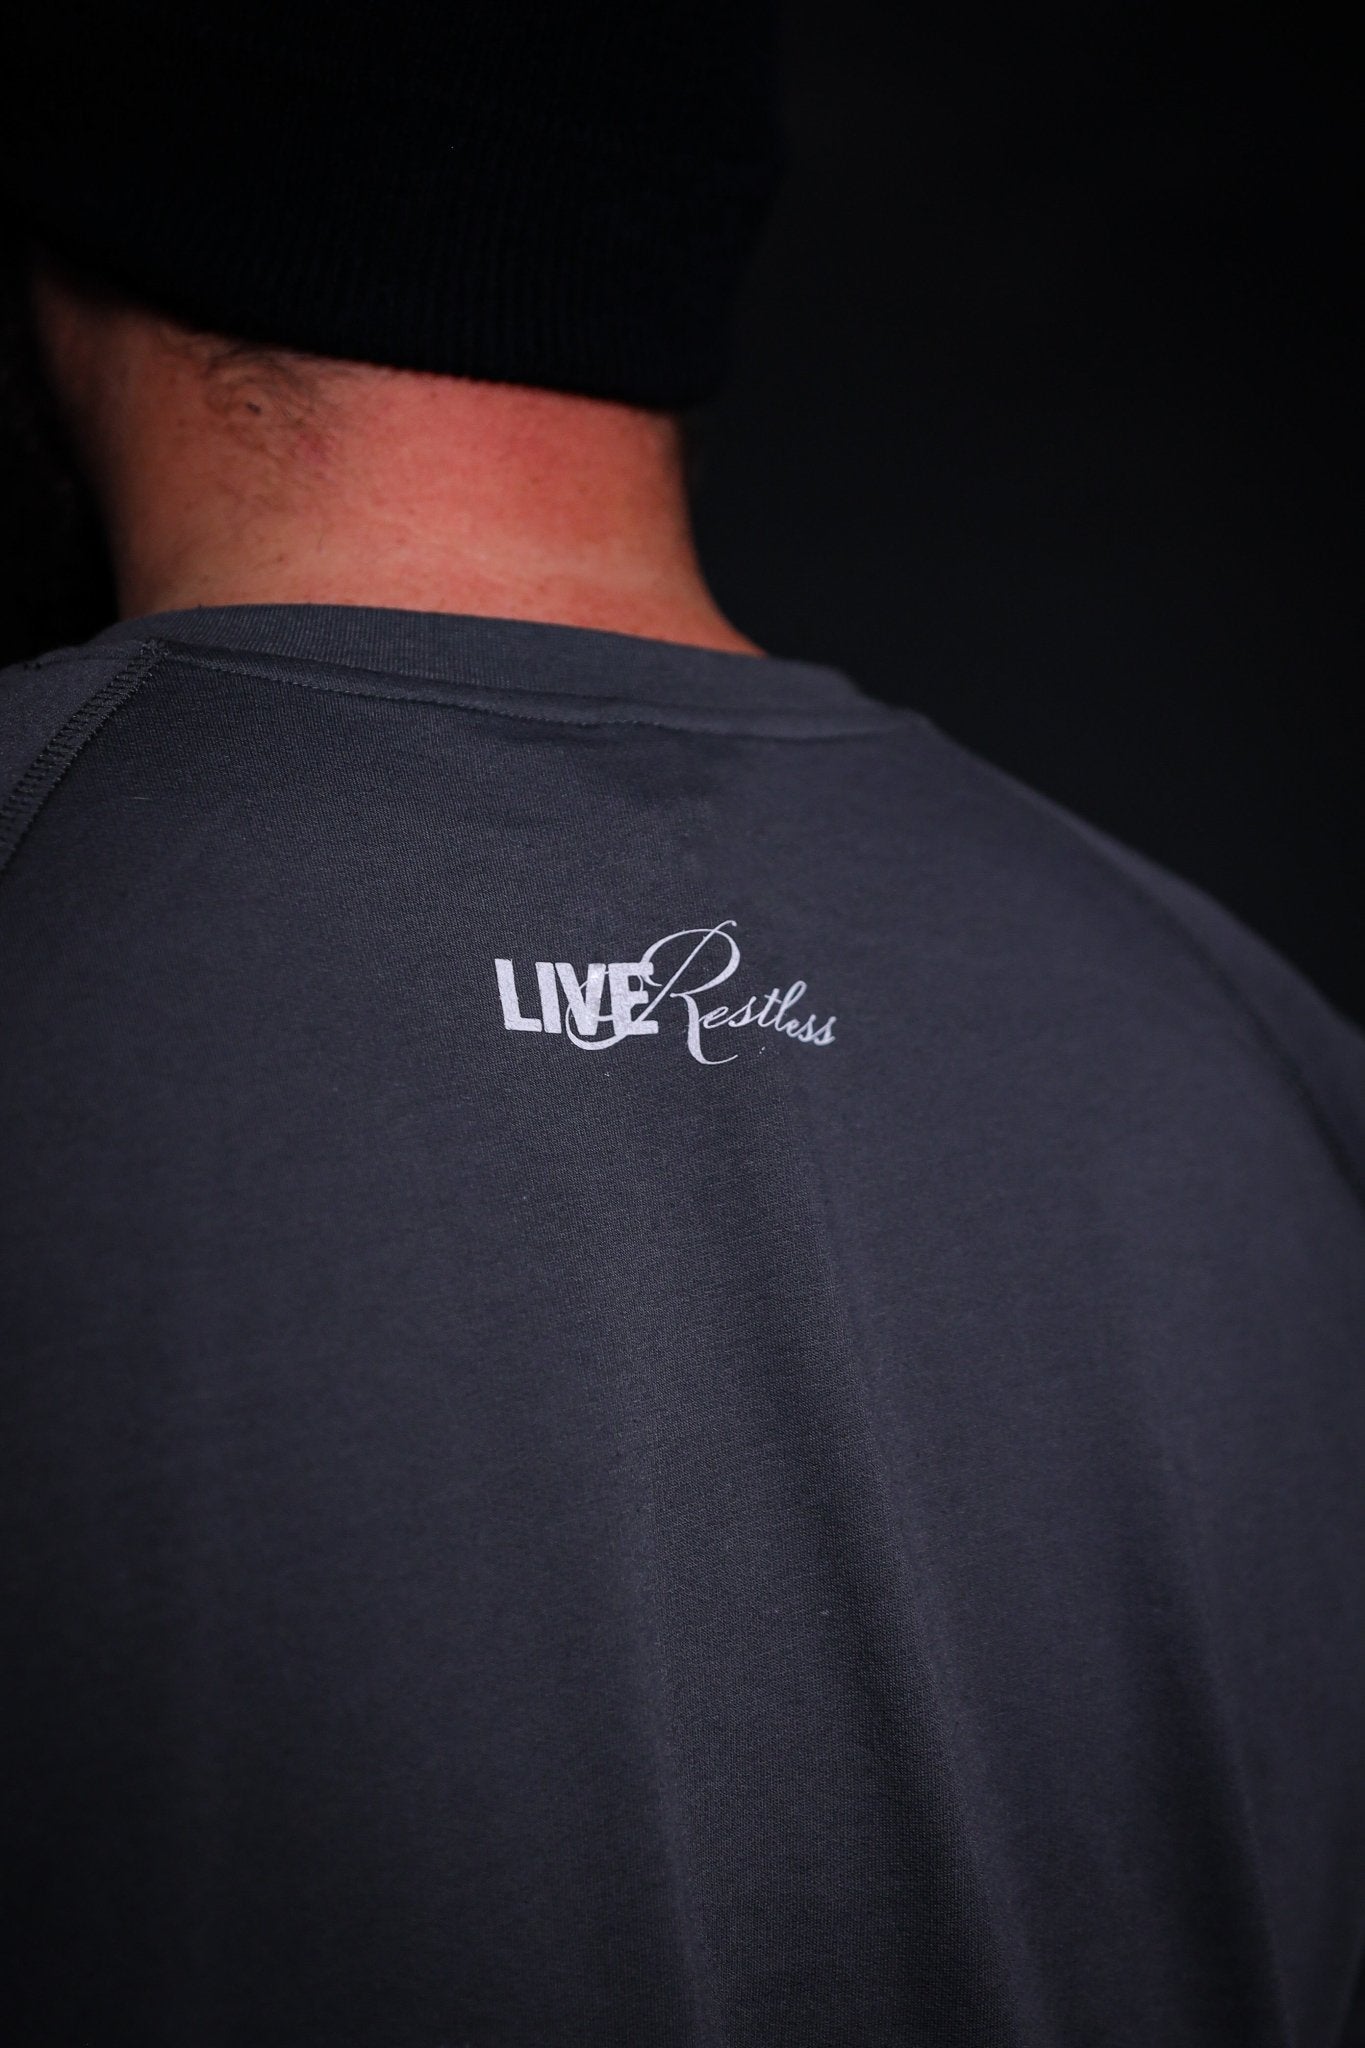 Live Restless Raglan Crew Sweatshirt - Grey - Live Restless, LLC.